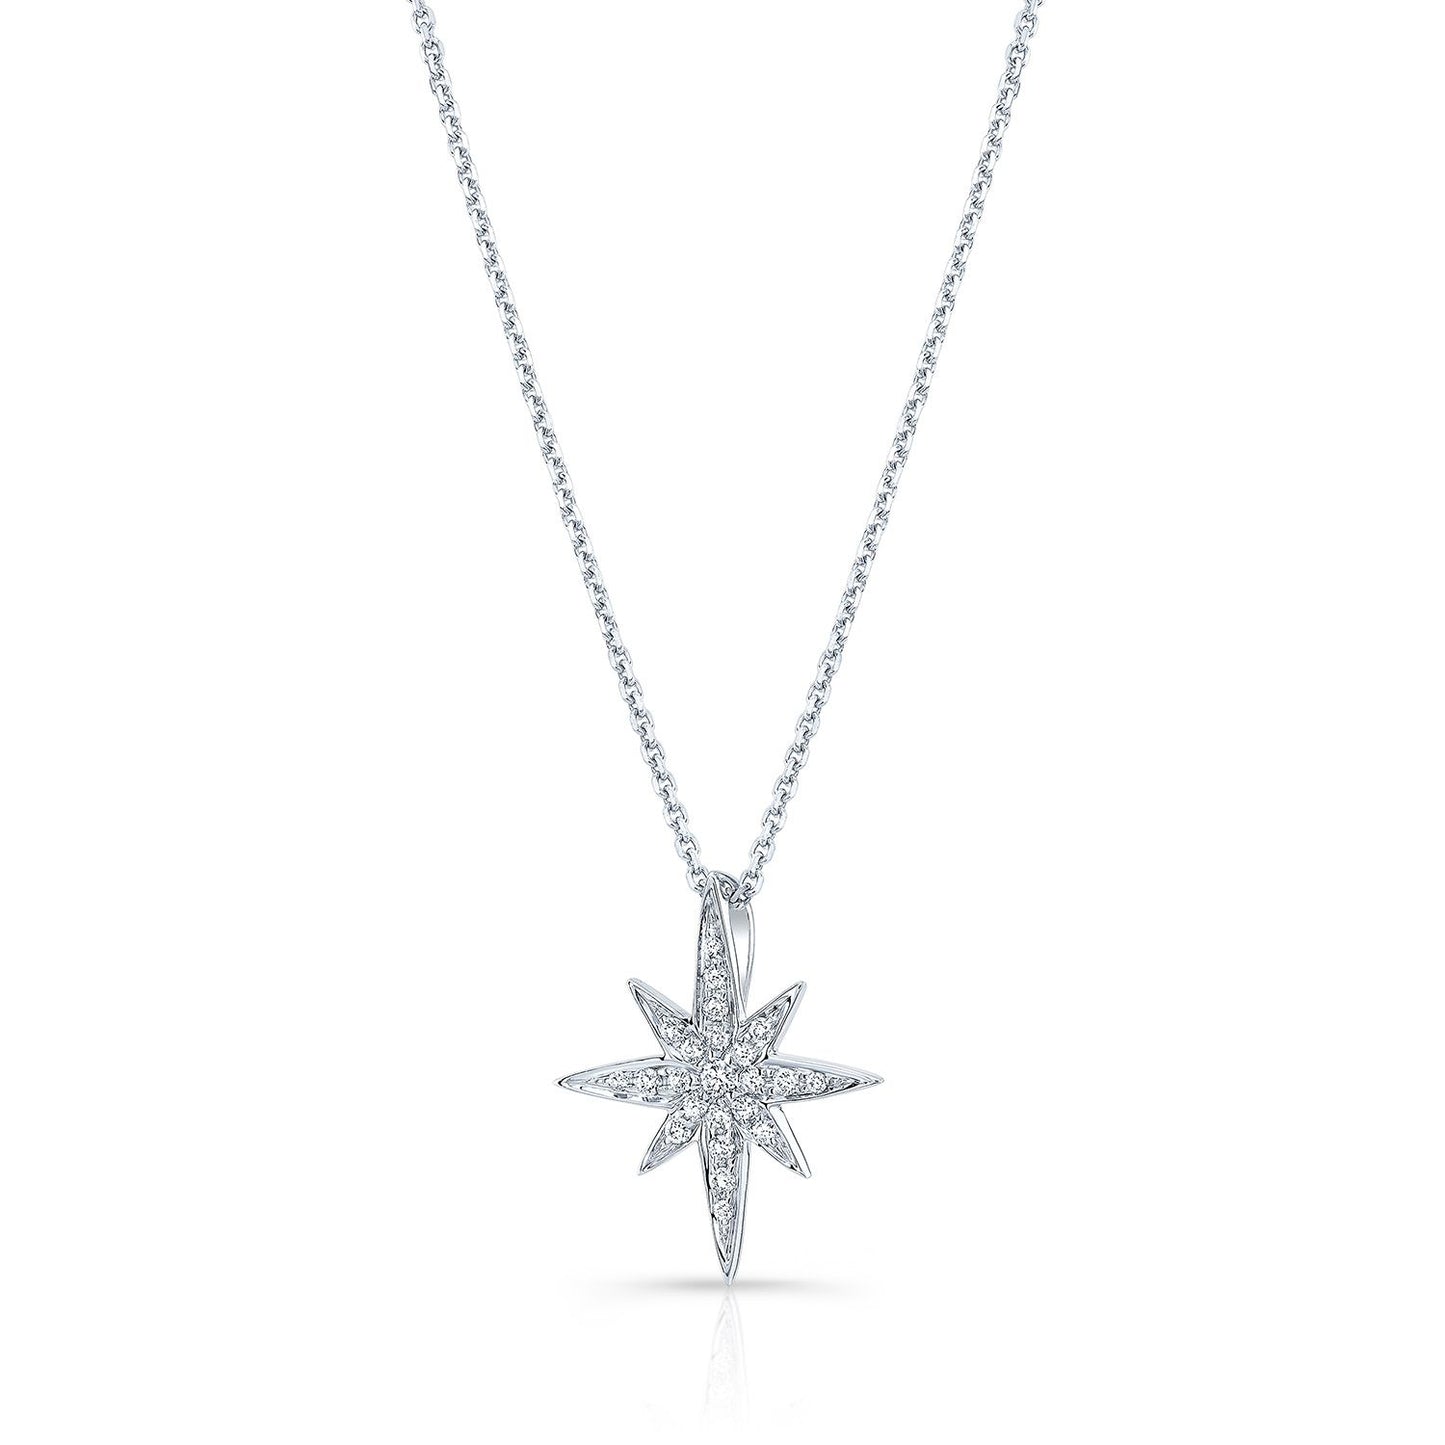 Diamond Pave North Star Pendant In 14k White Gold, 17-inch Chain